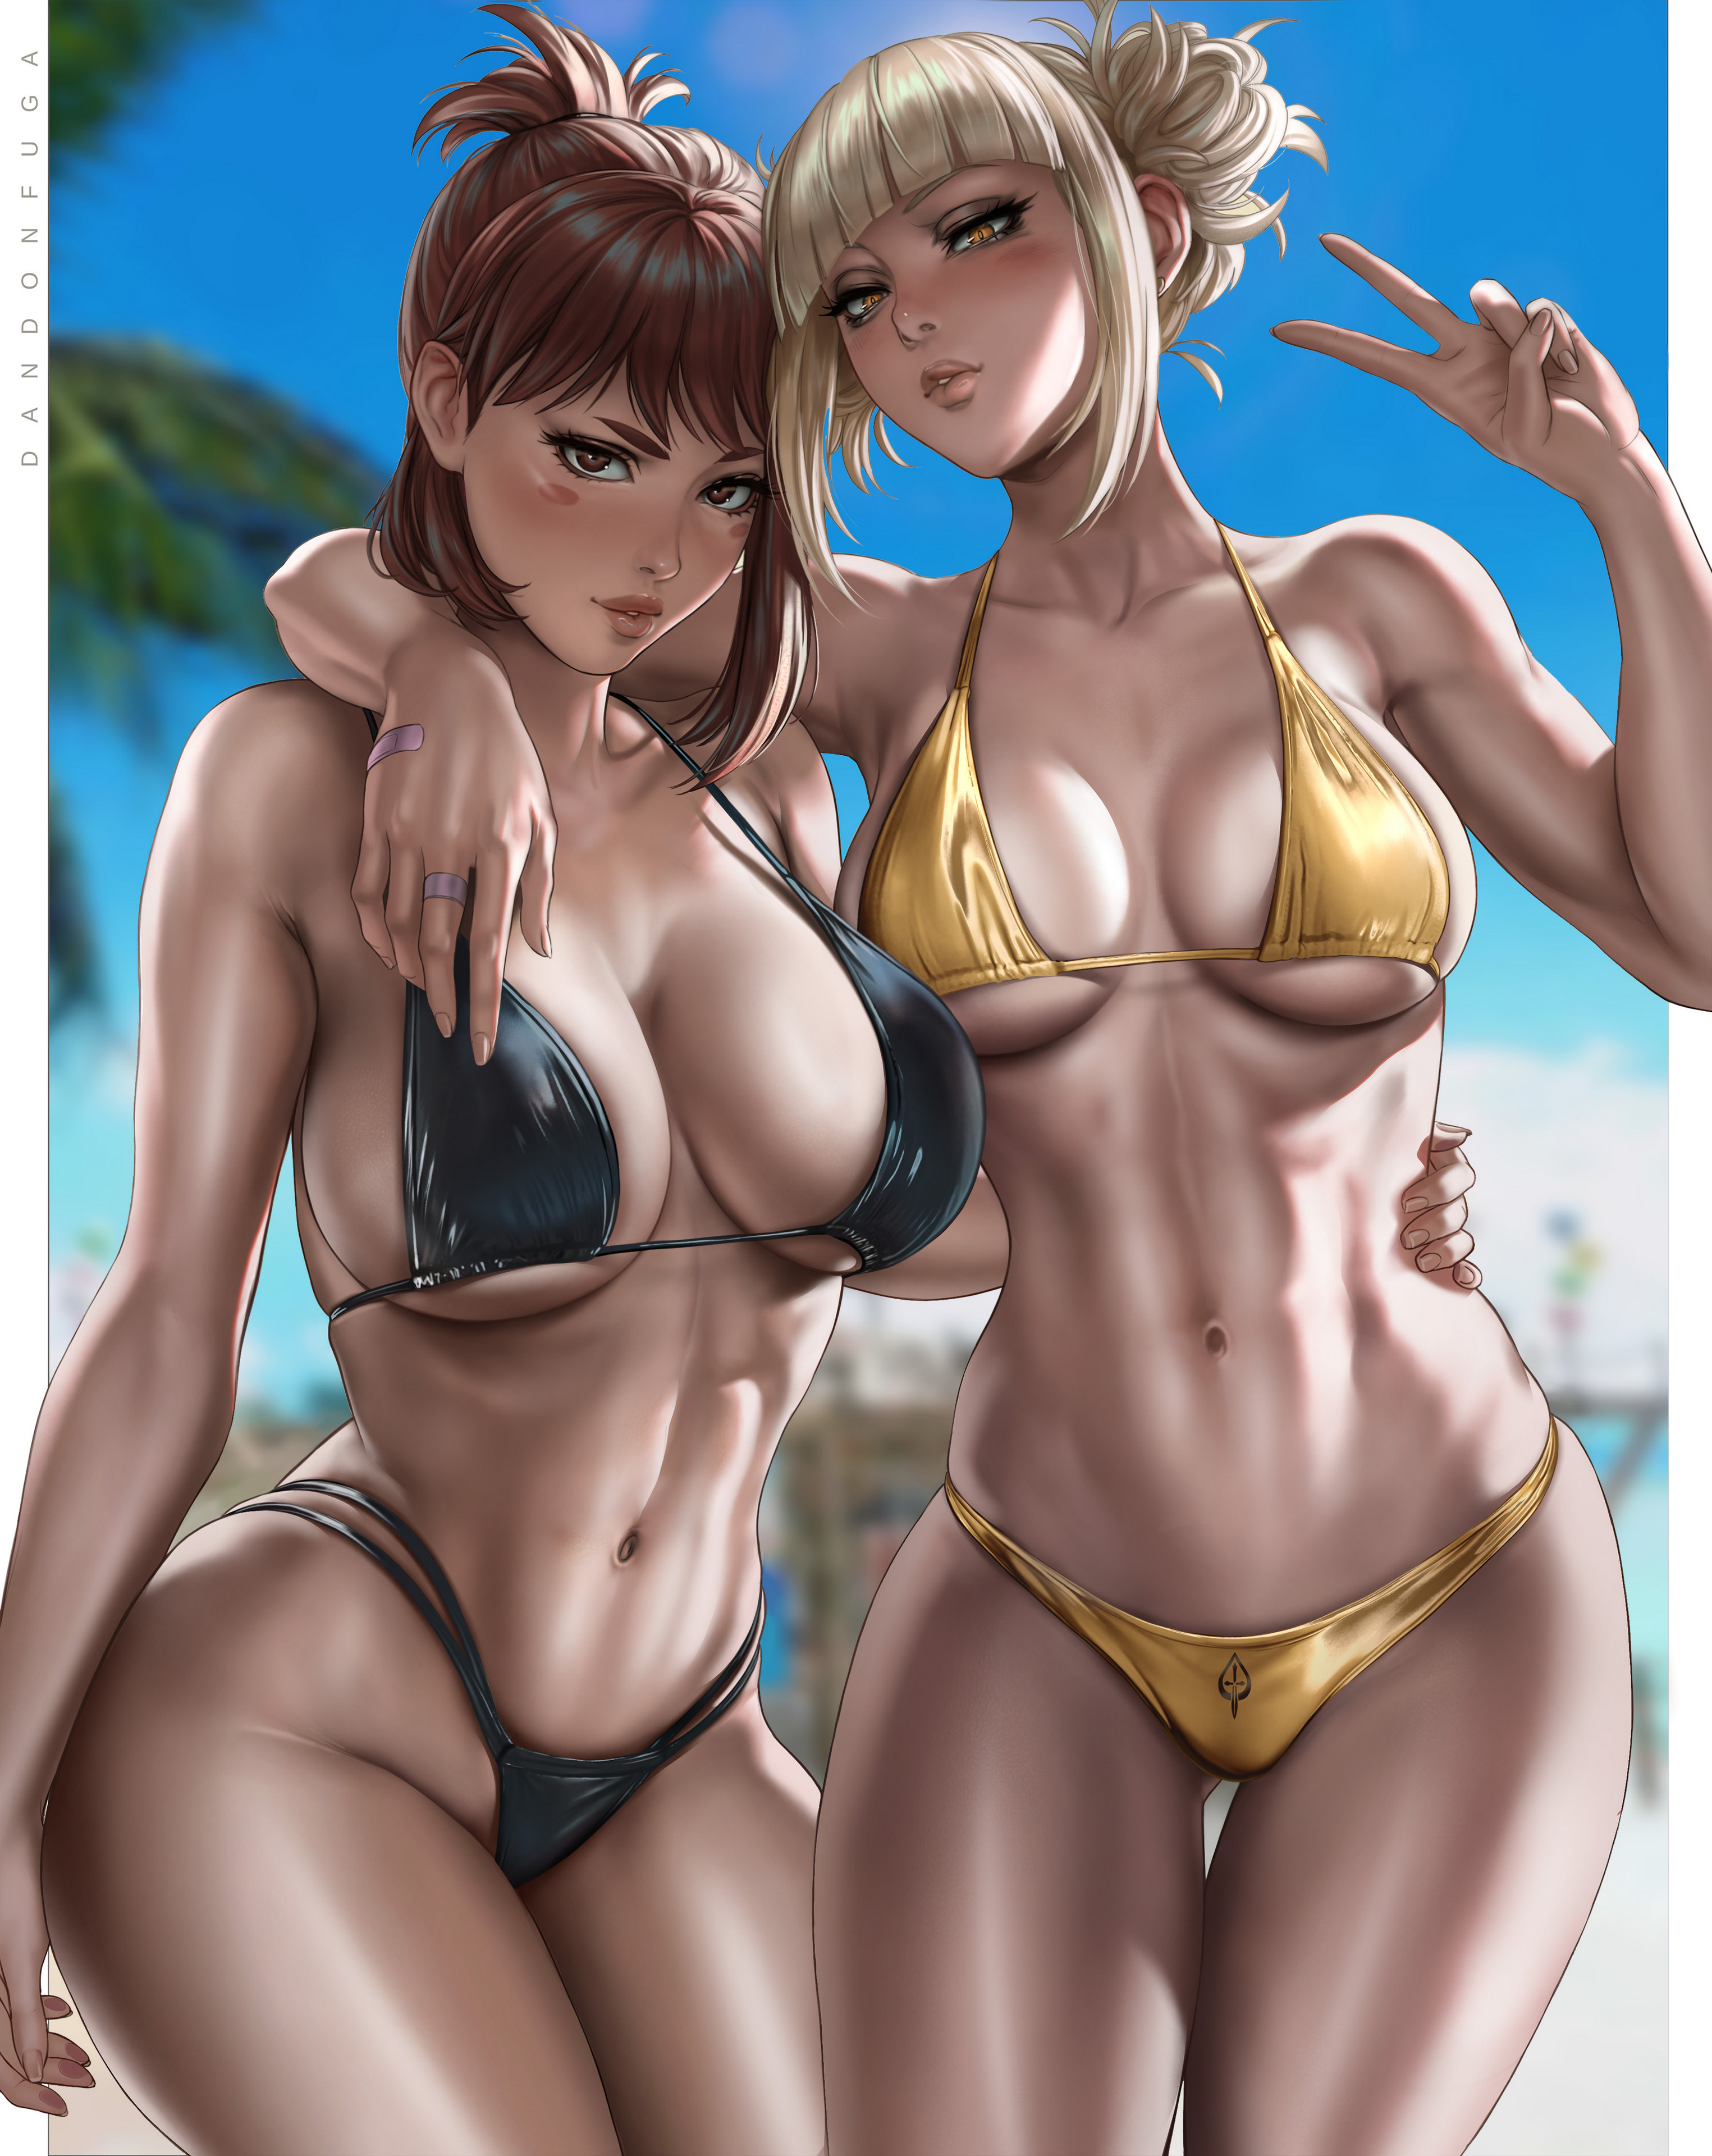 Бесплатное фото Две нарисованные девушки в бикини